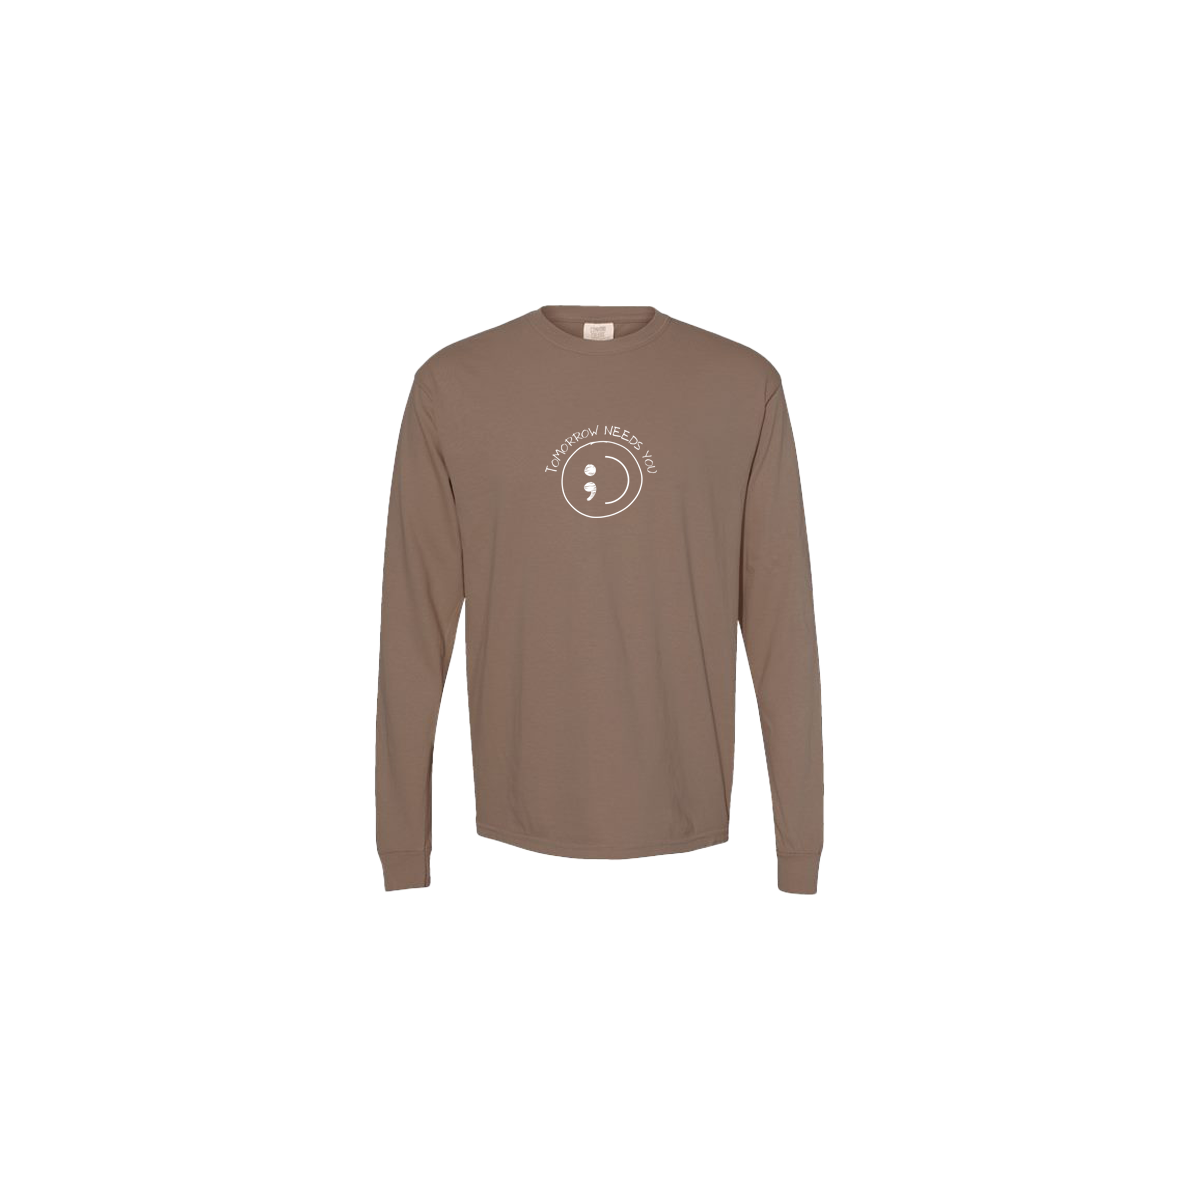 Tomorrow Needs You Embroidered Brown Long Sleeve Tshirt - Mental Health Awareness Clothing